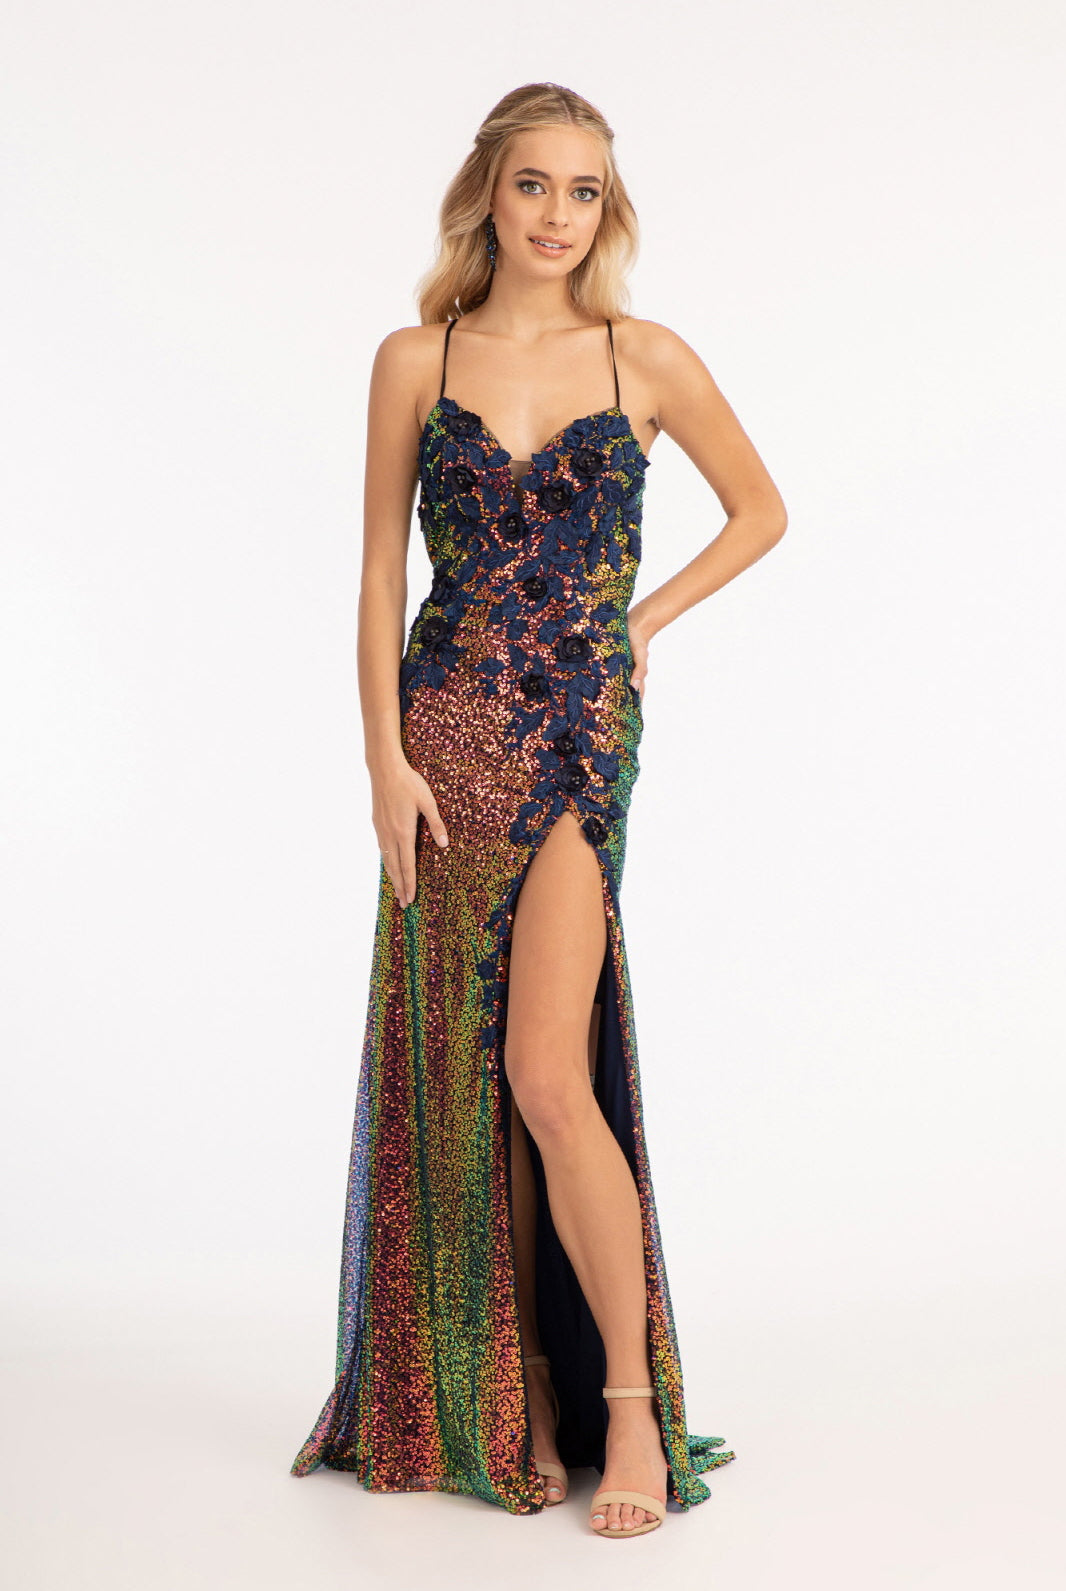 Full Iridescent Sequin Sweetheart Neckline Prom Dress Leg Slit GLGL3025-PROM-smcfashion.com